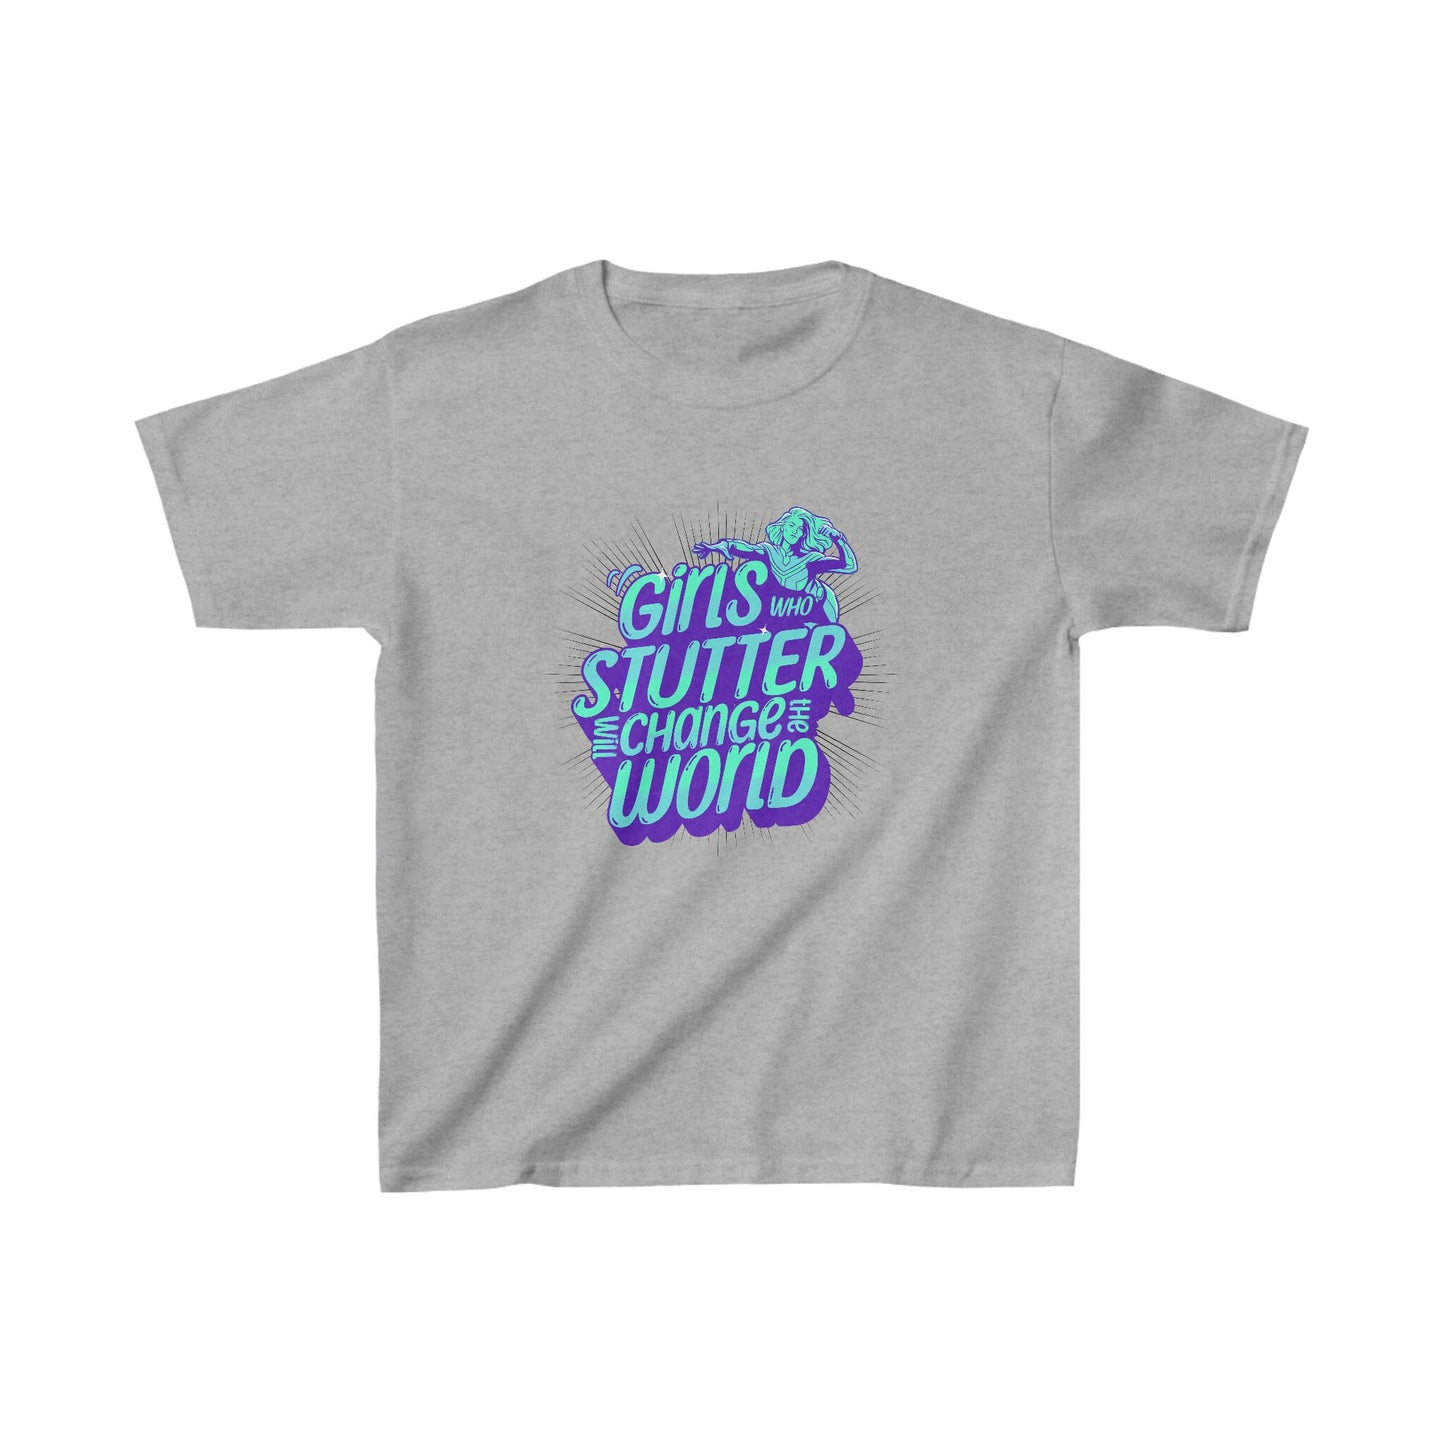 Girls Who Stutter Will Change the World Tshirt